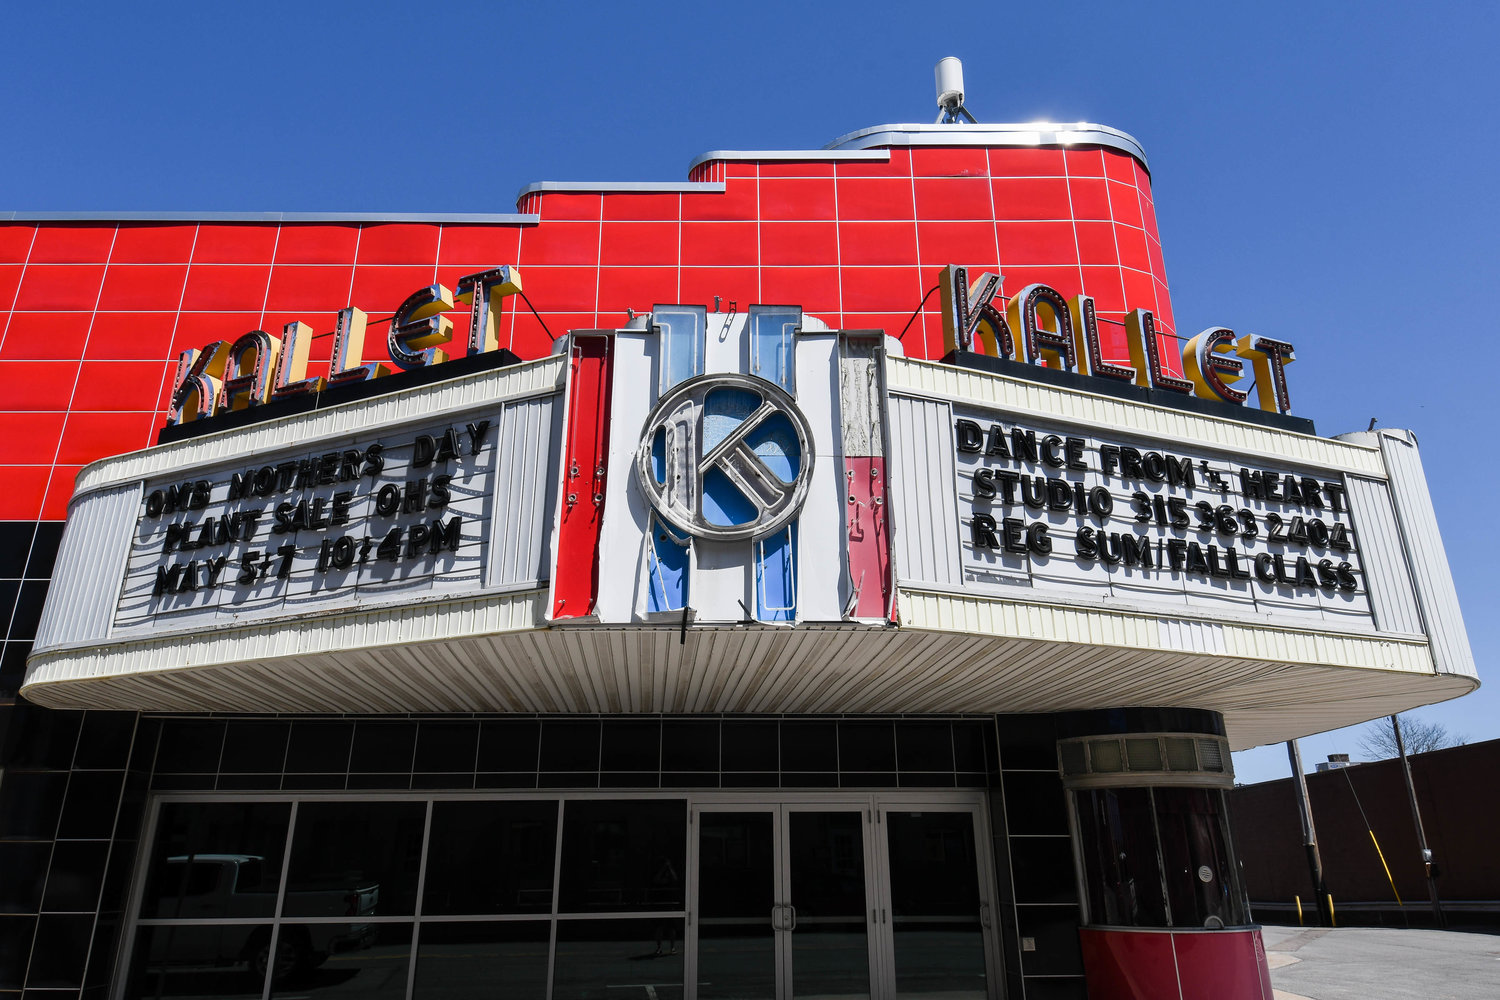 The Kallet Theater in Oneida.